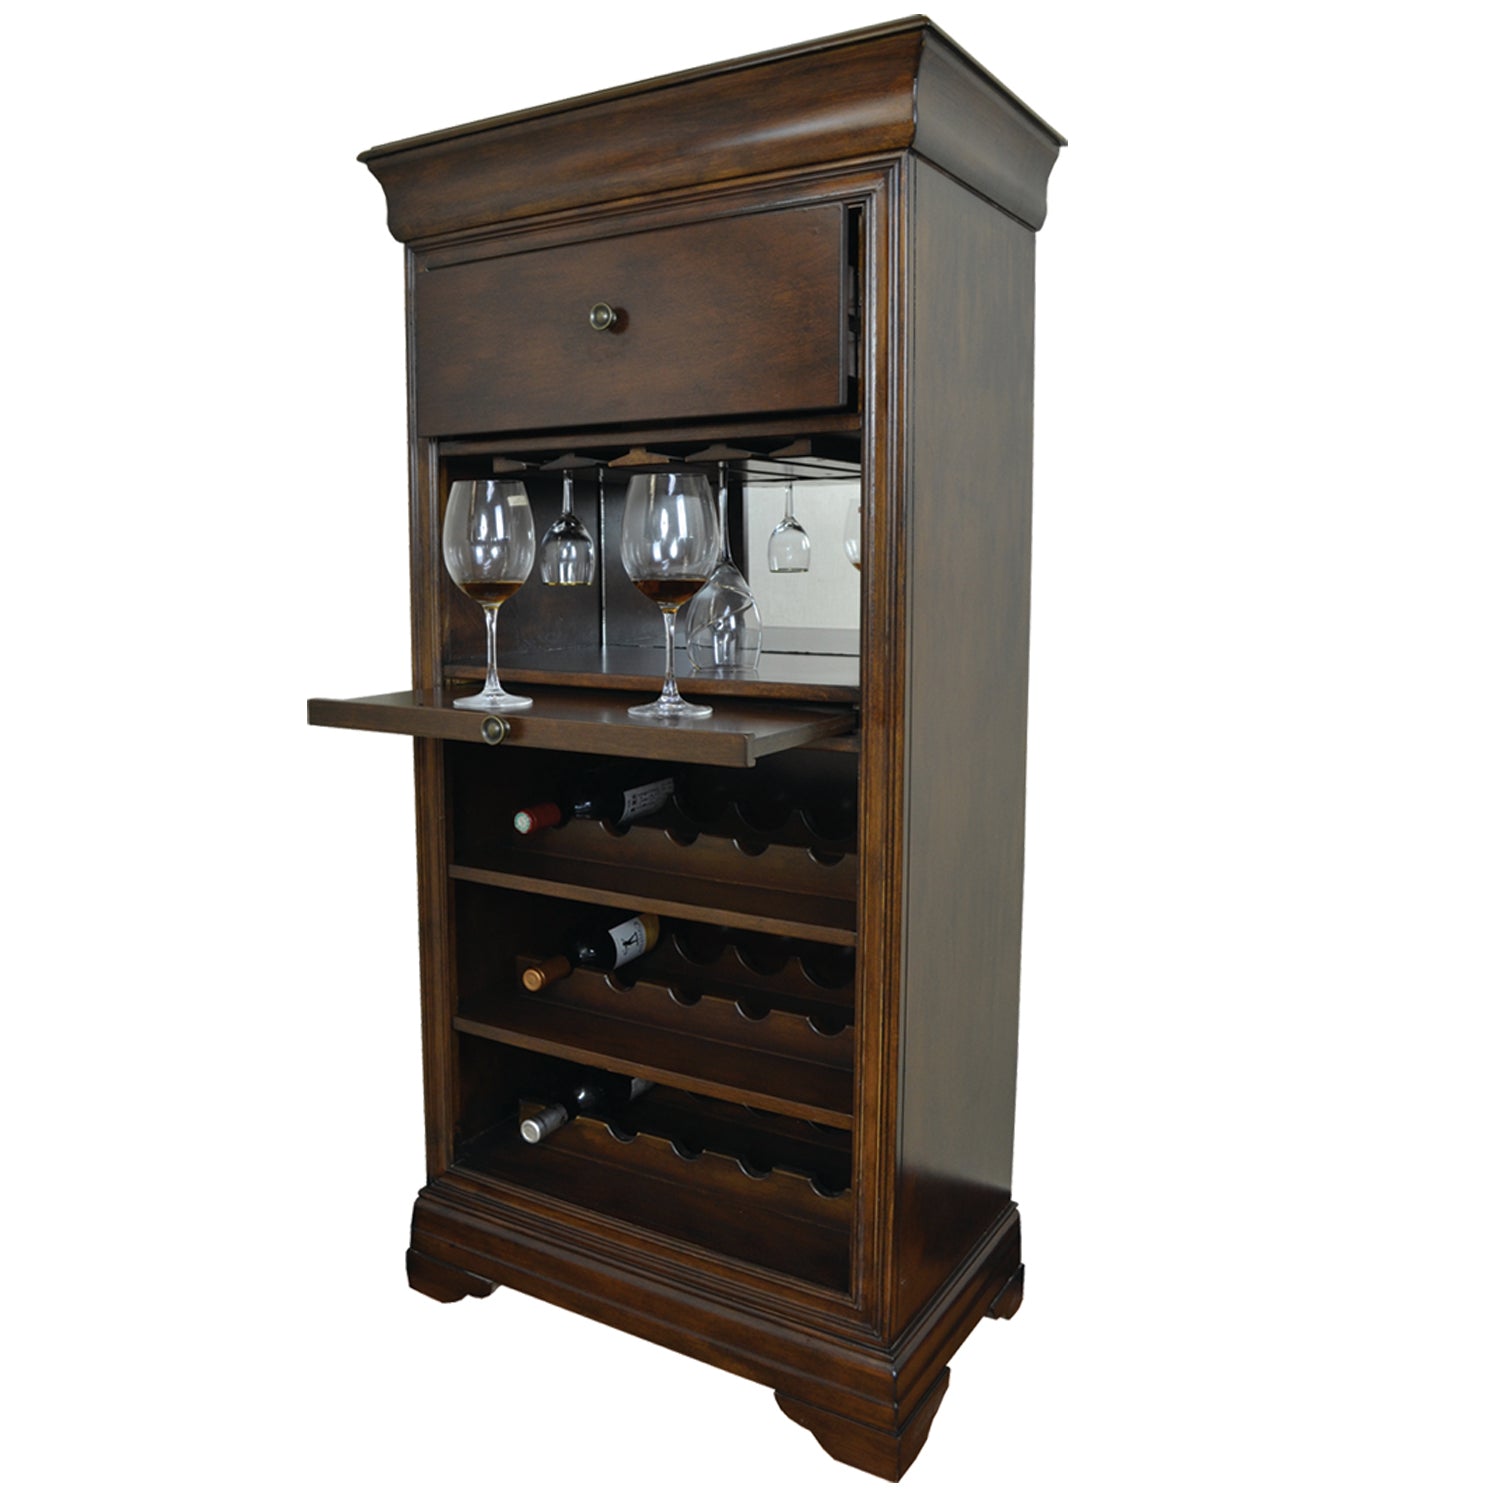 RAM Game Room Bar Cabinet W/ Wine Rack